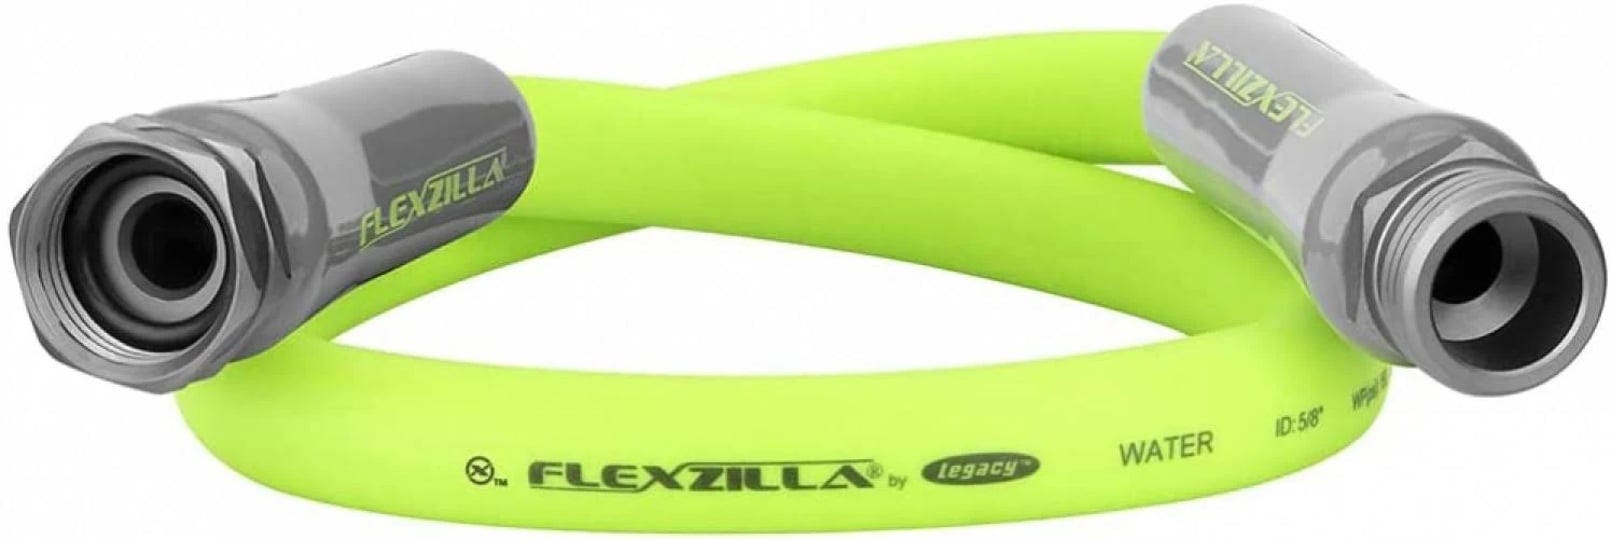 flexzilla-garden-lead-in-hose-5-8-inch-x-6